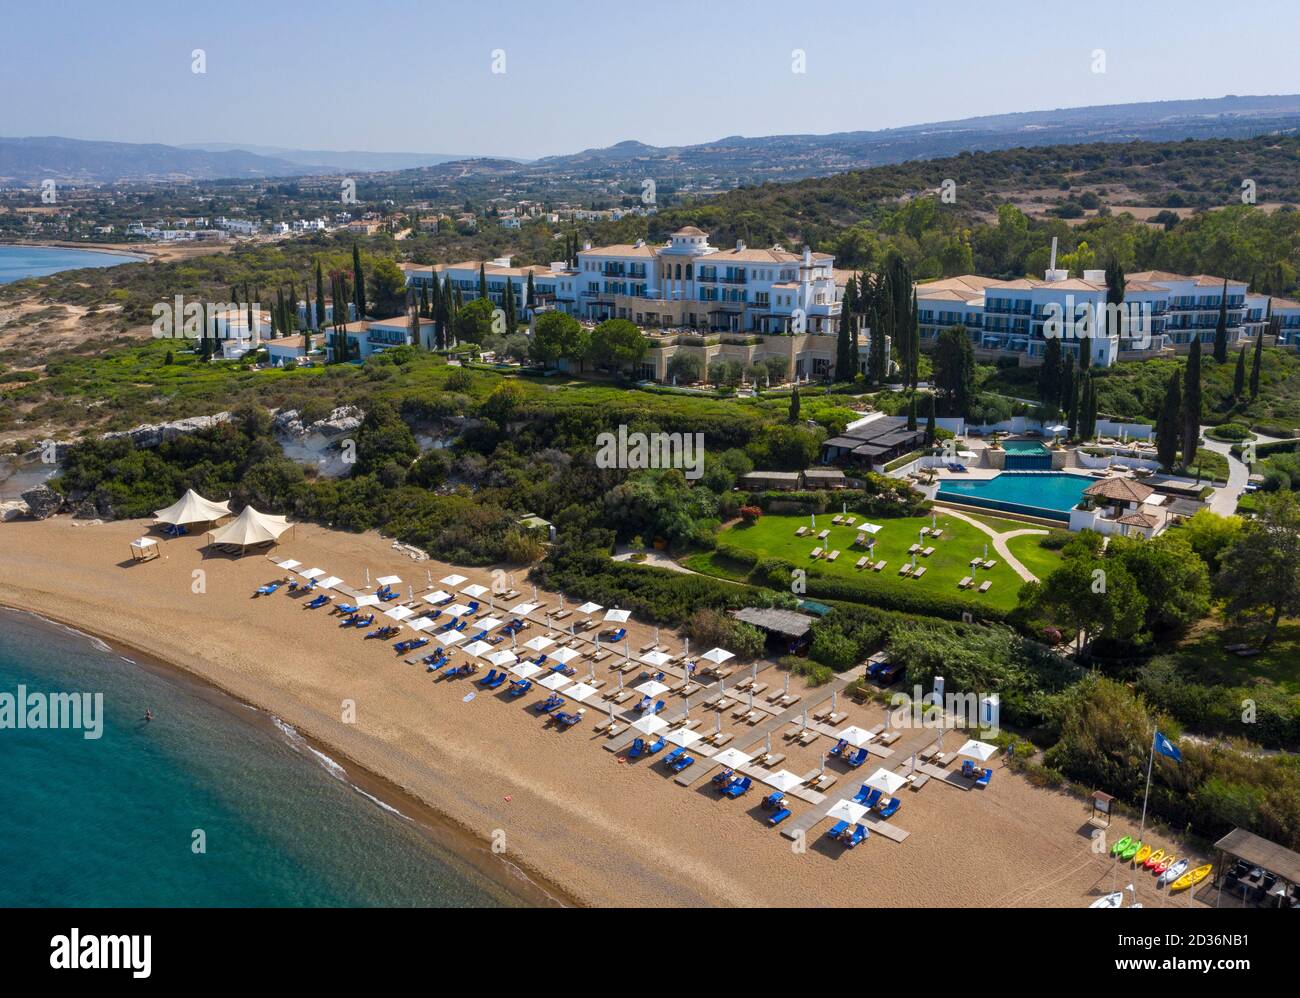 Aerial view of the Anassa Hotel and the Akamas peninsula coastline near Latchi, Cyprus. Stock Photo